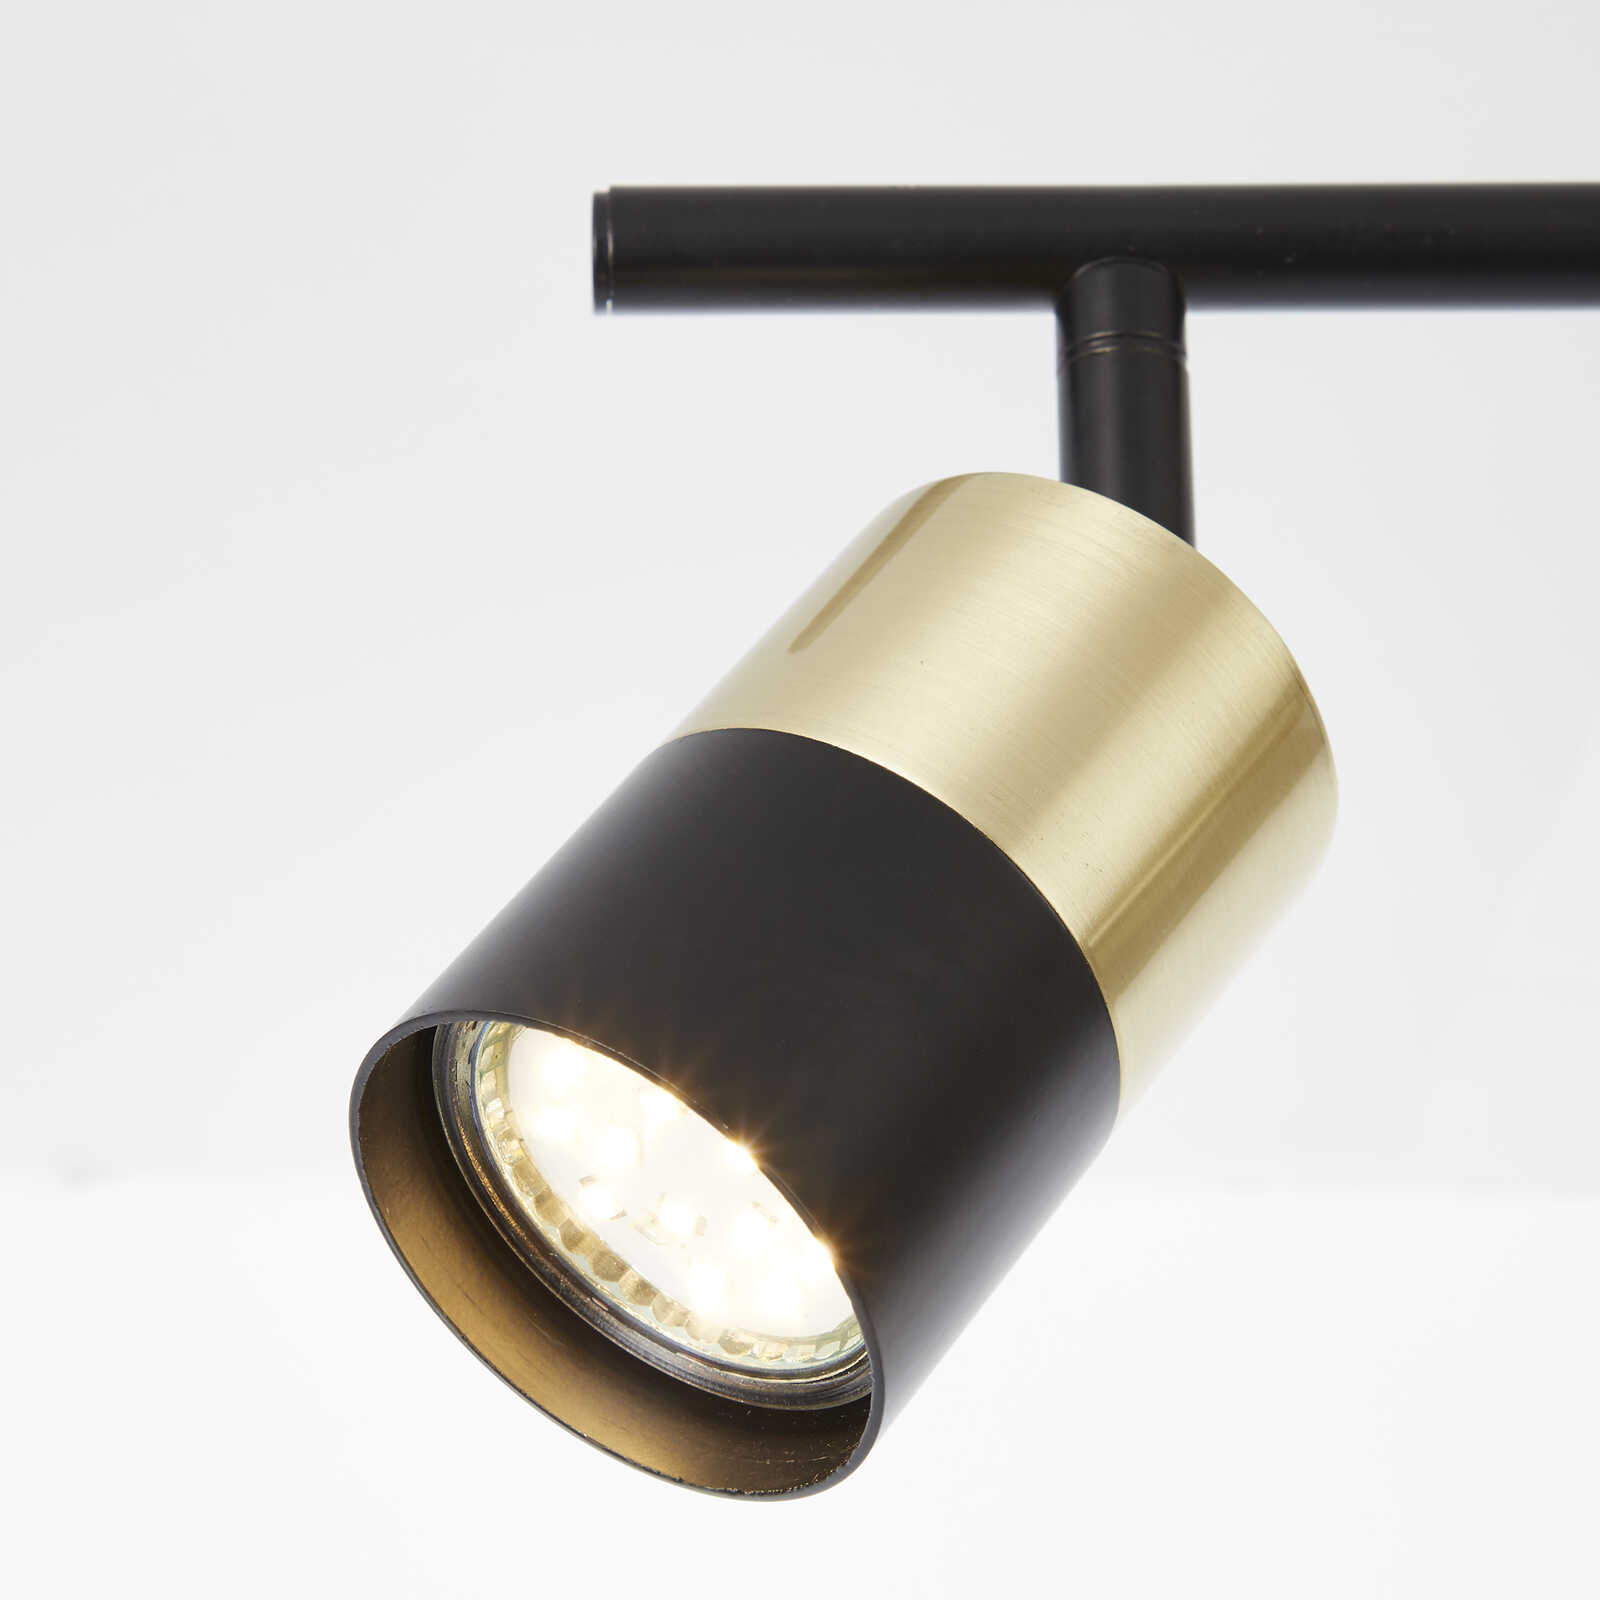             Metal spotlight tube - Leonard - Gold
        